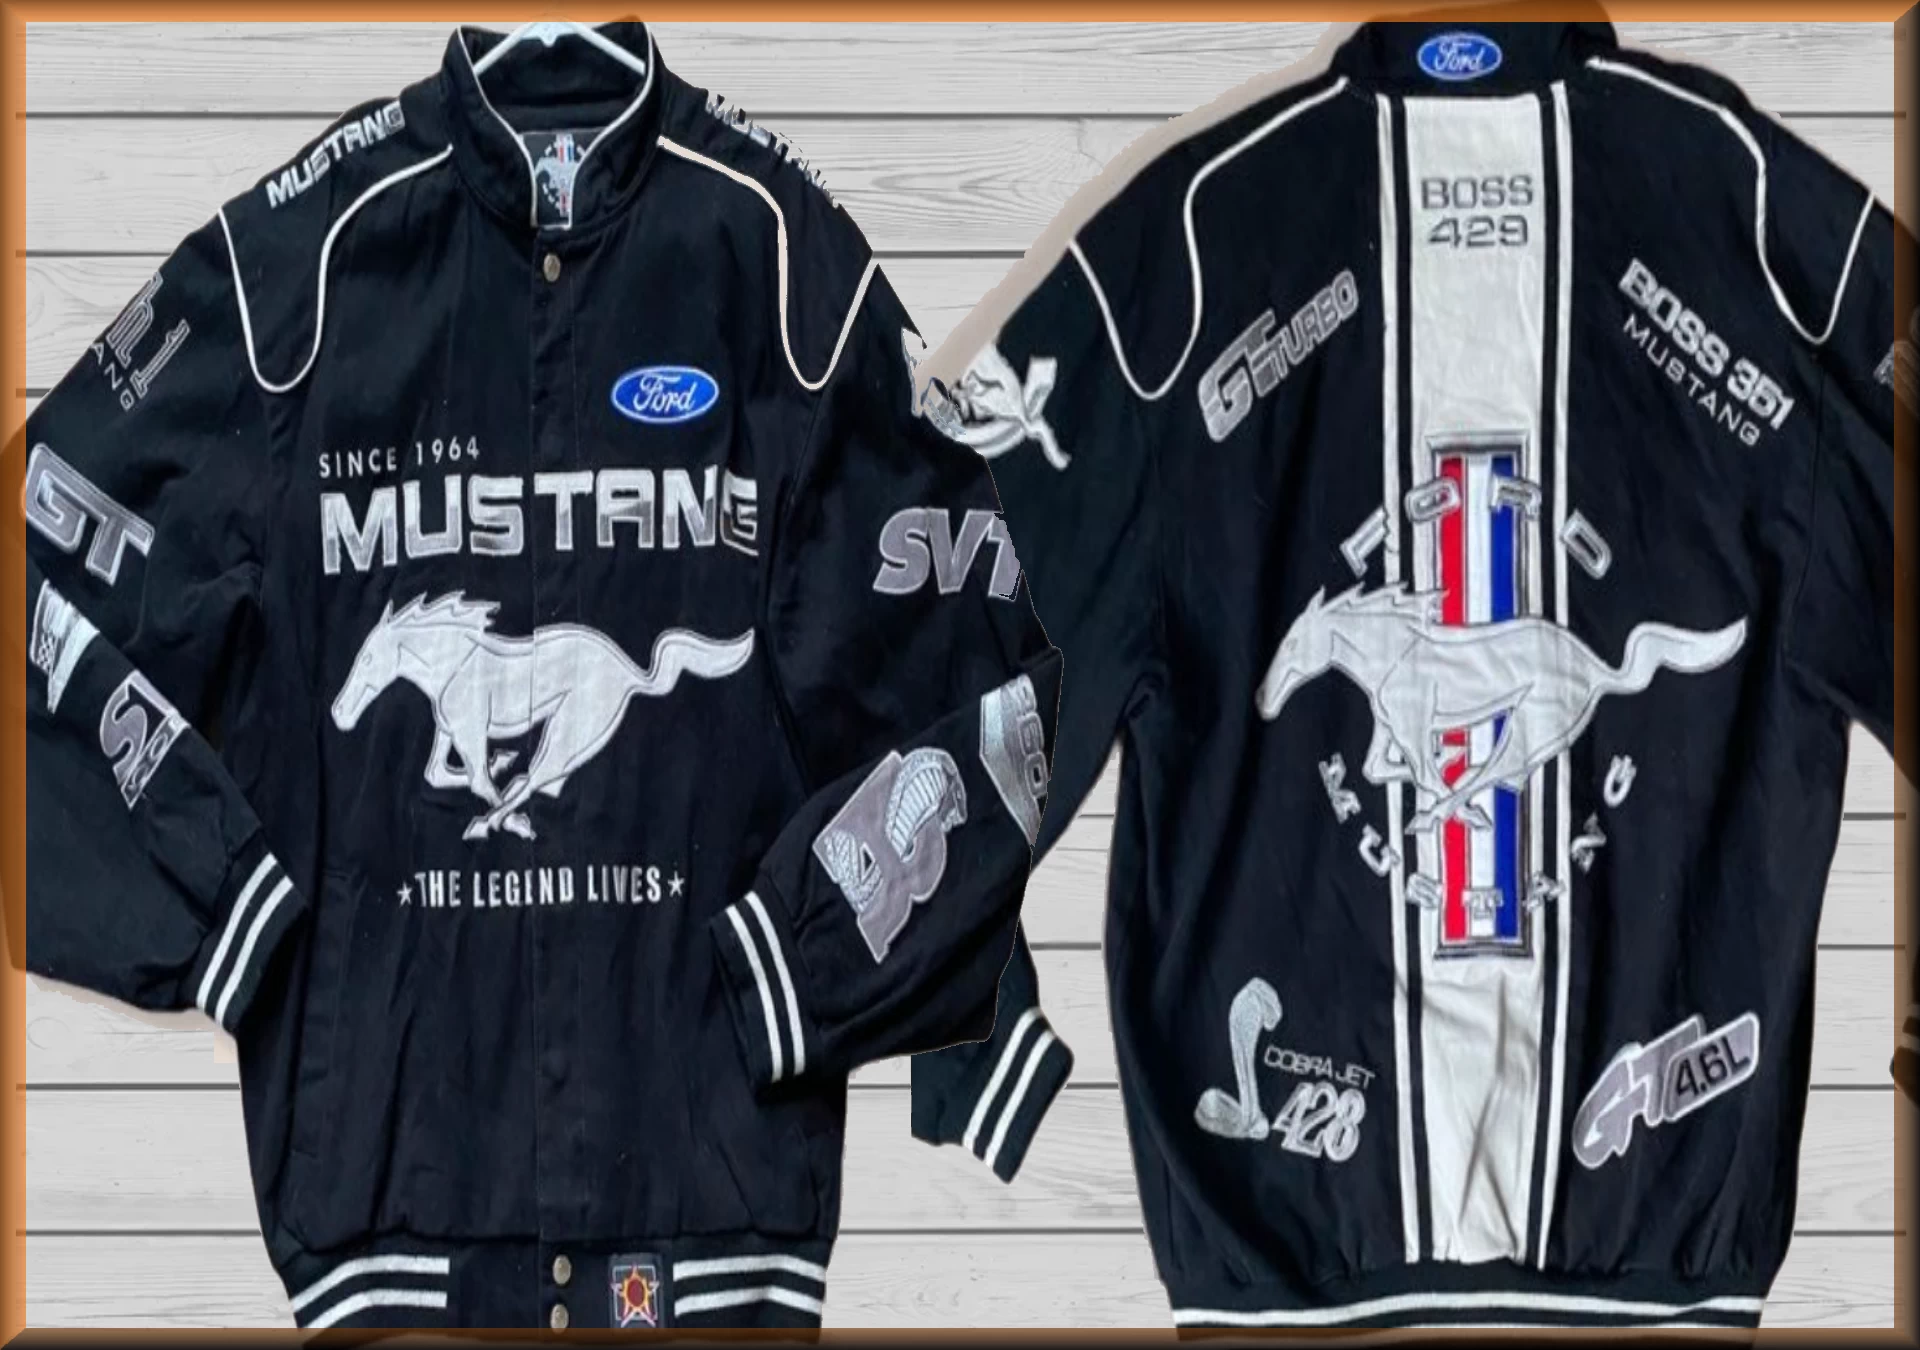 Black Mustang Adult Motorsports Jacket by JH Design